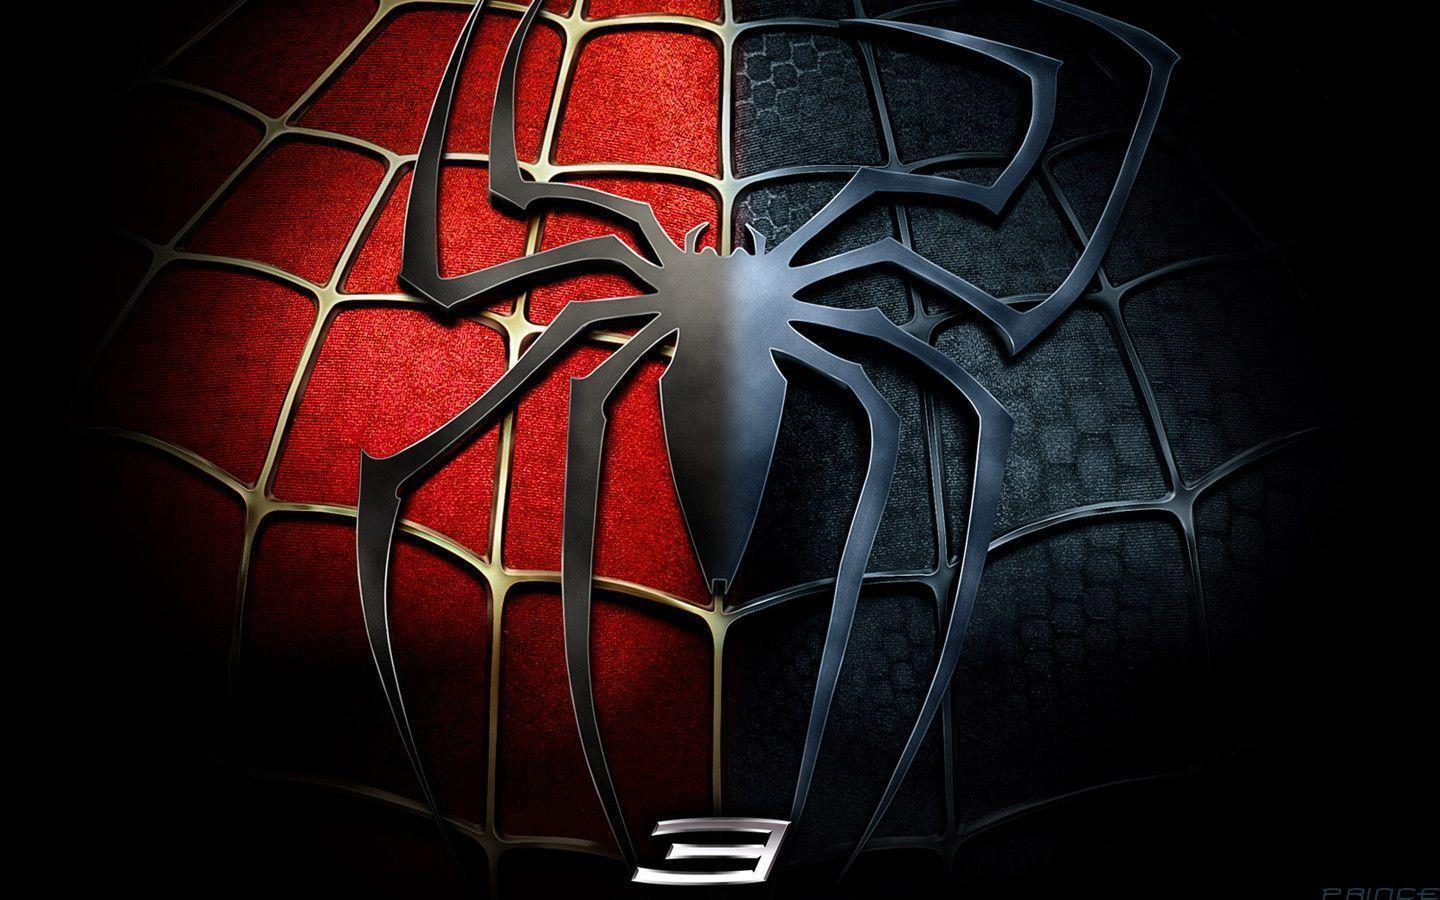 Spiderman Carnage Wallpaper 37483 HD Wallpaper in Movies